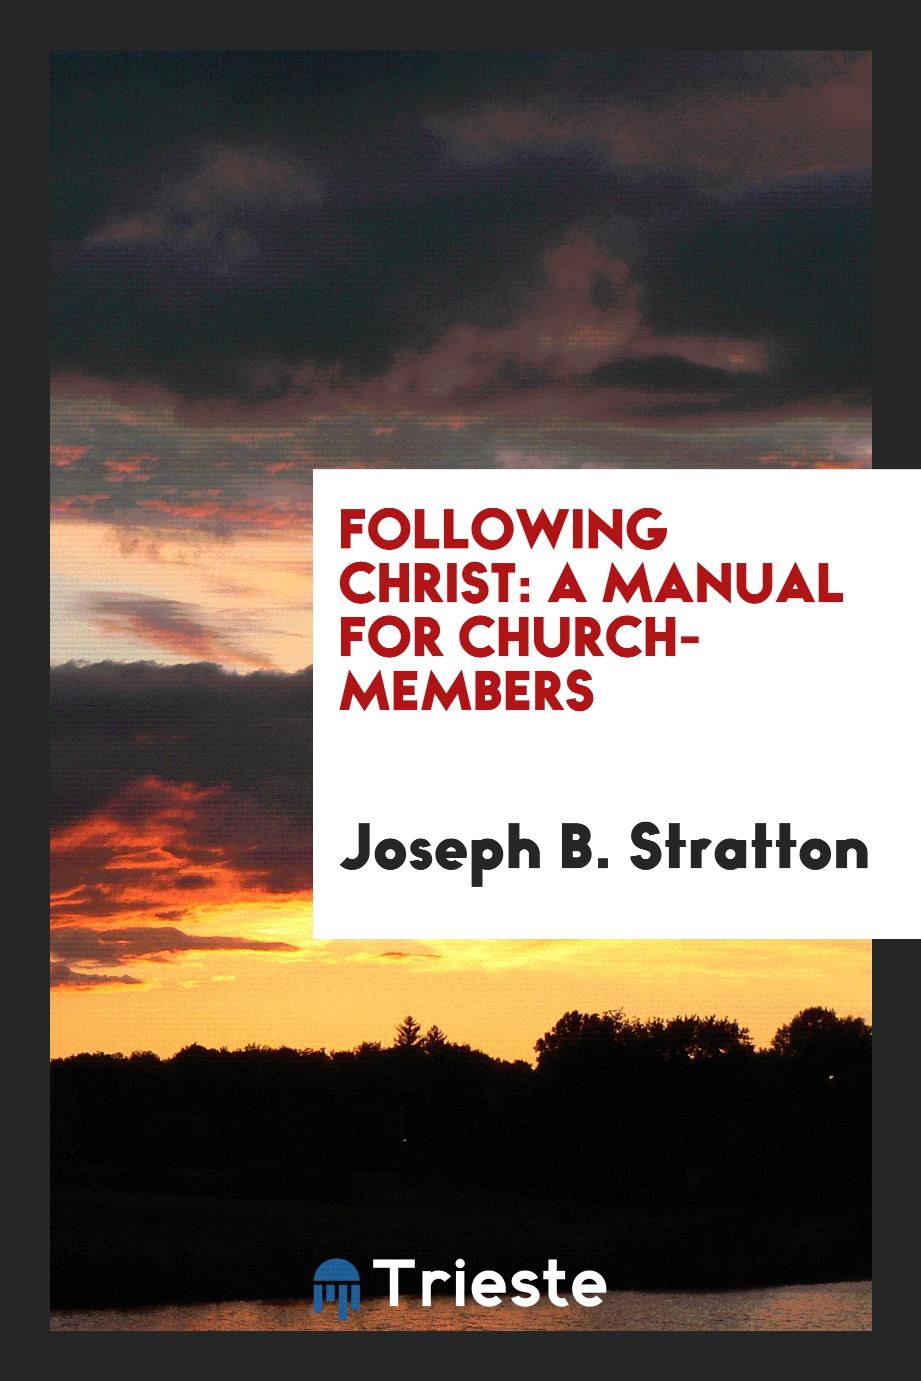 Following Christ: a manual for church-members